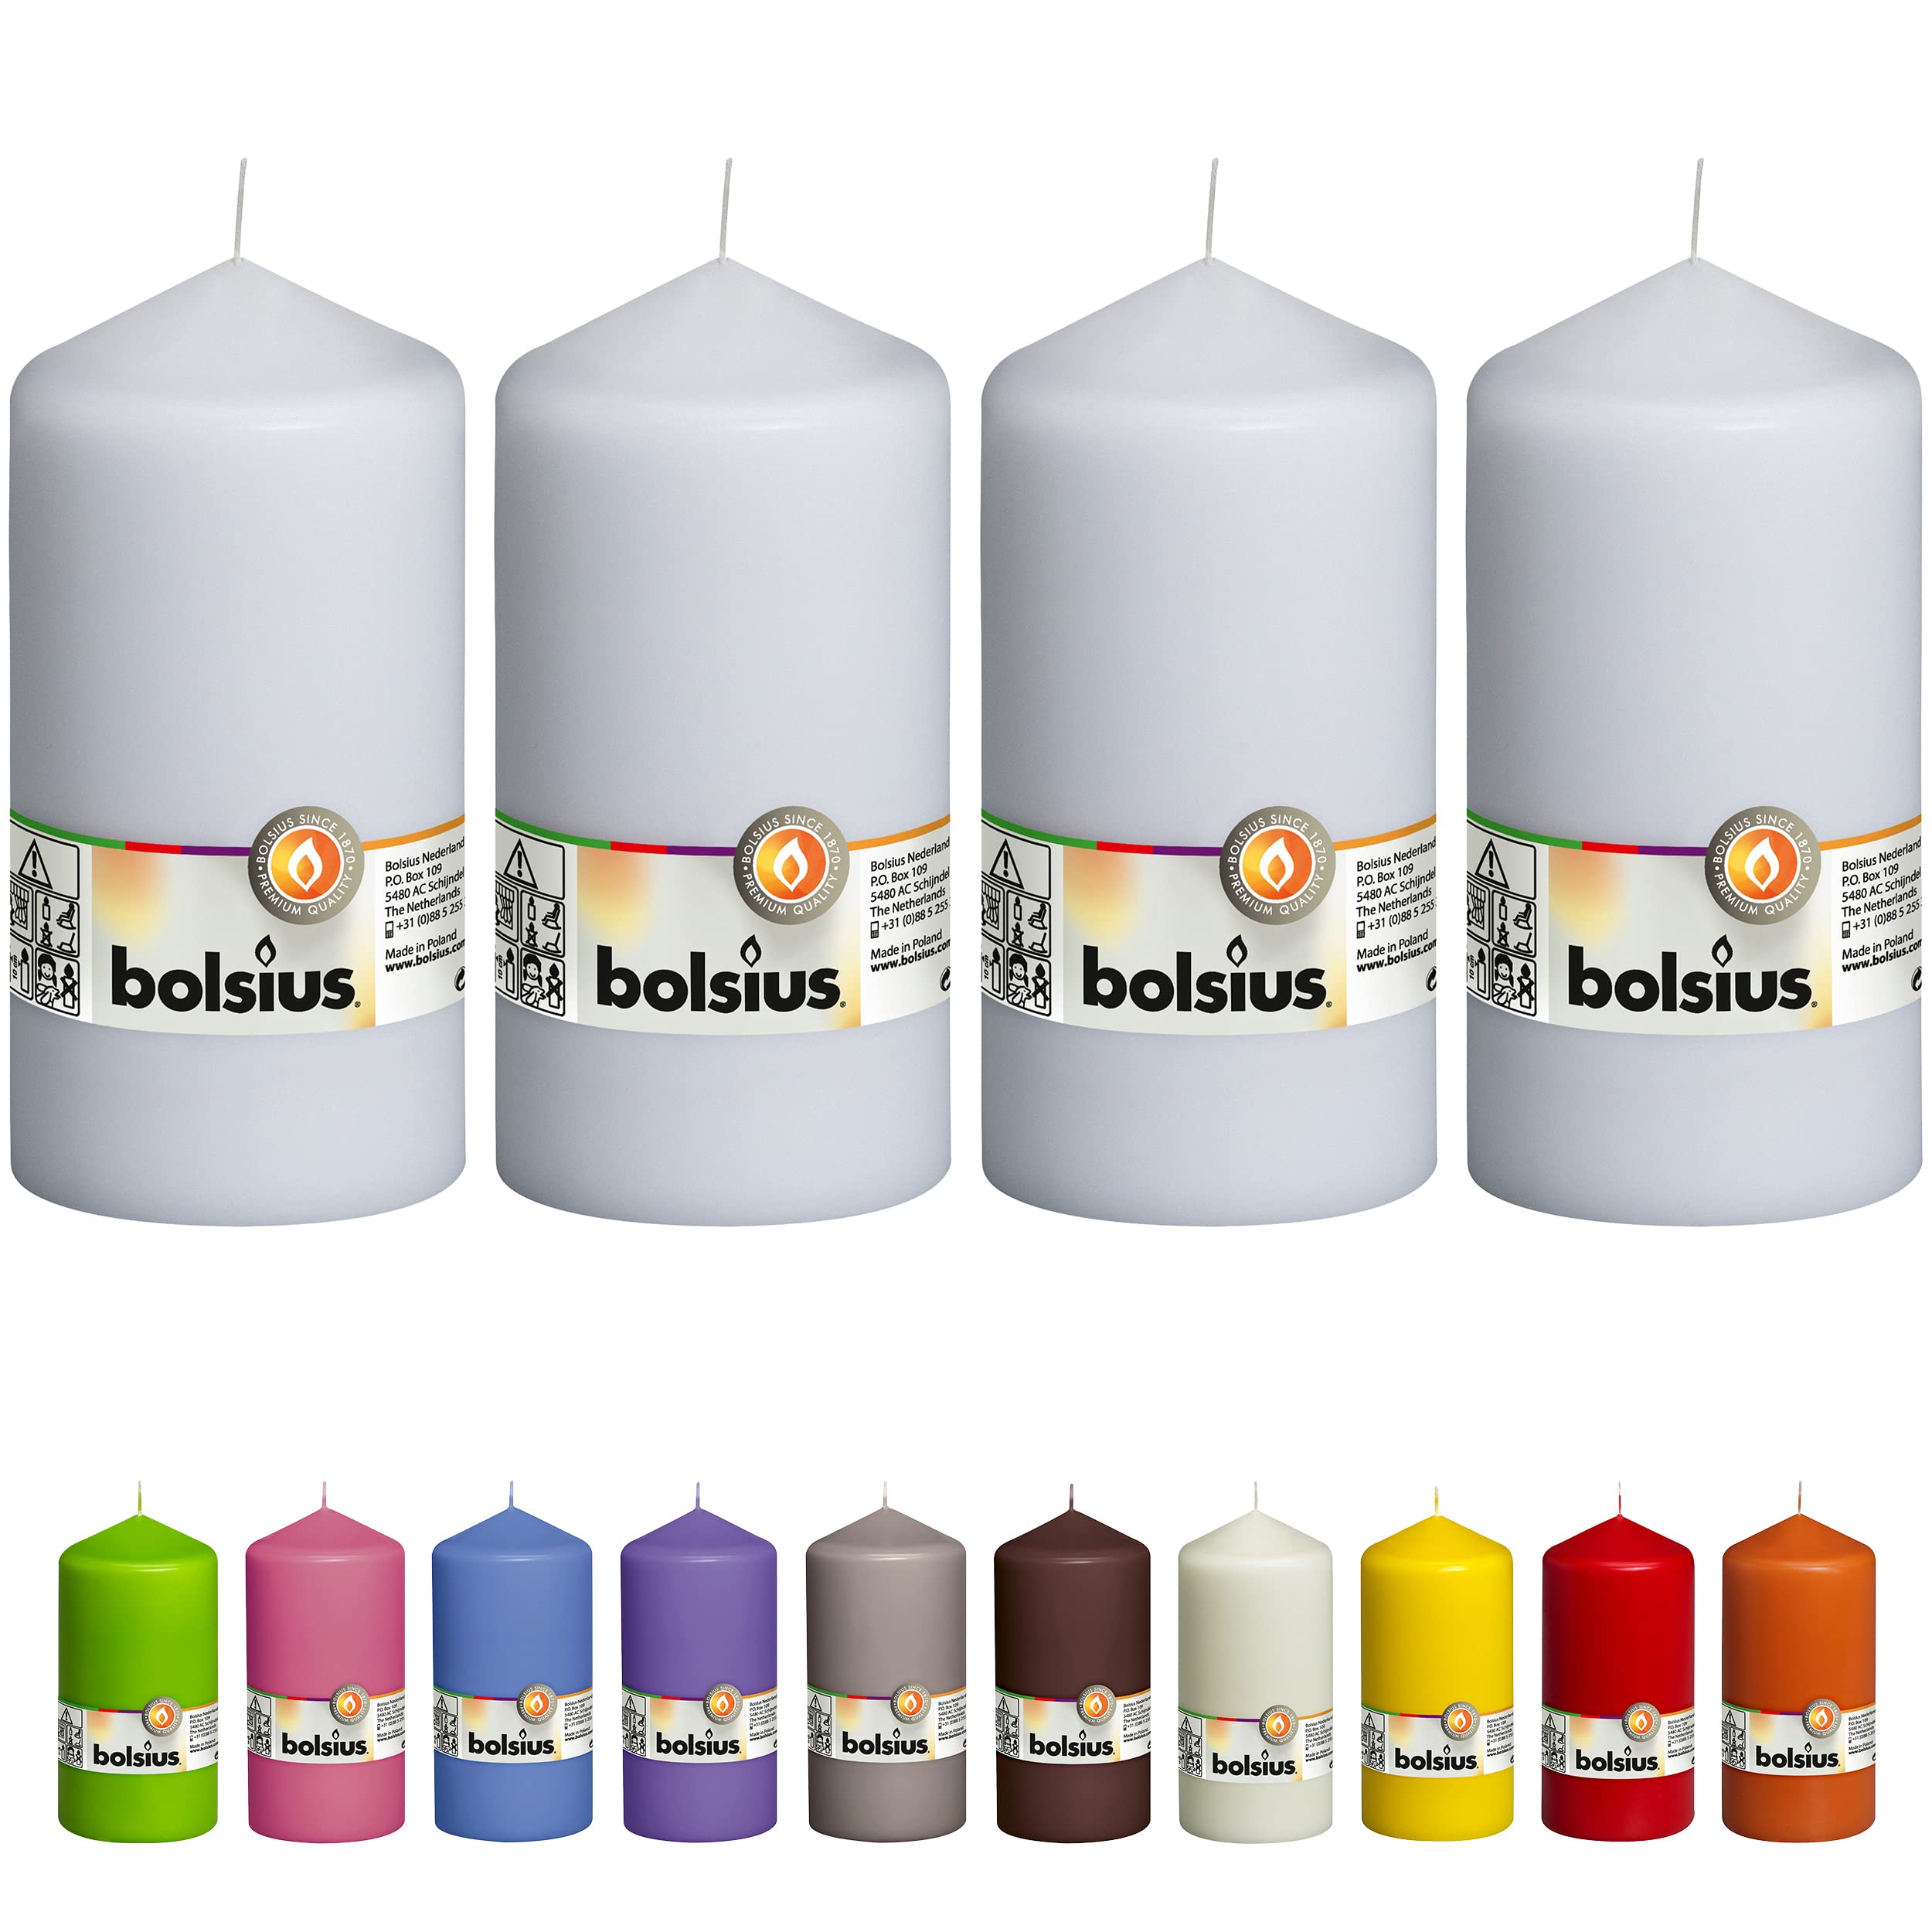 bolsius Pillar Candles  - Very Good